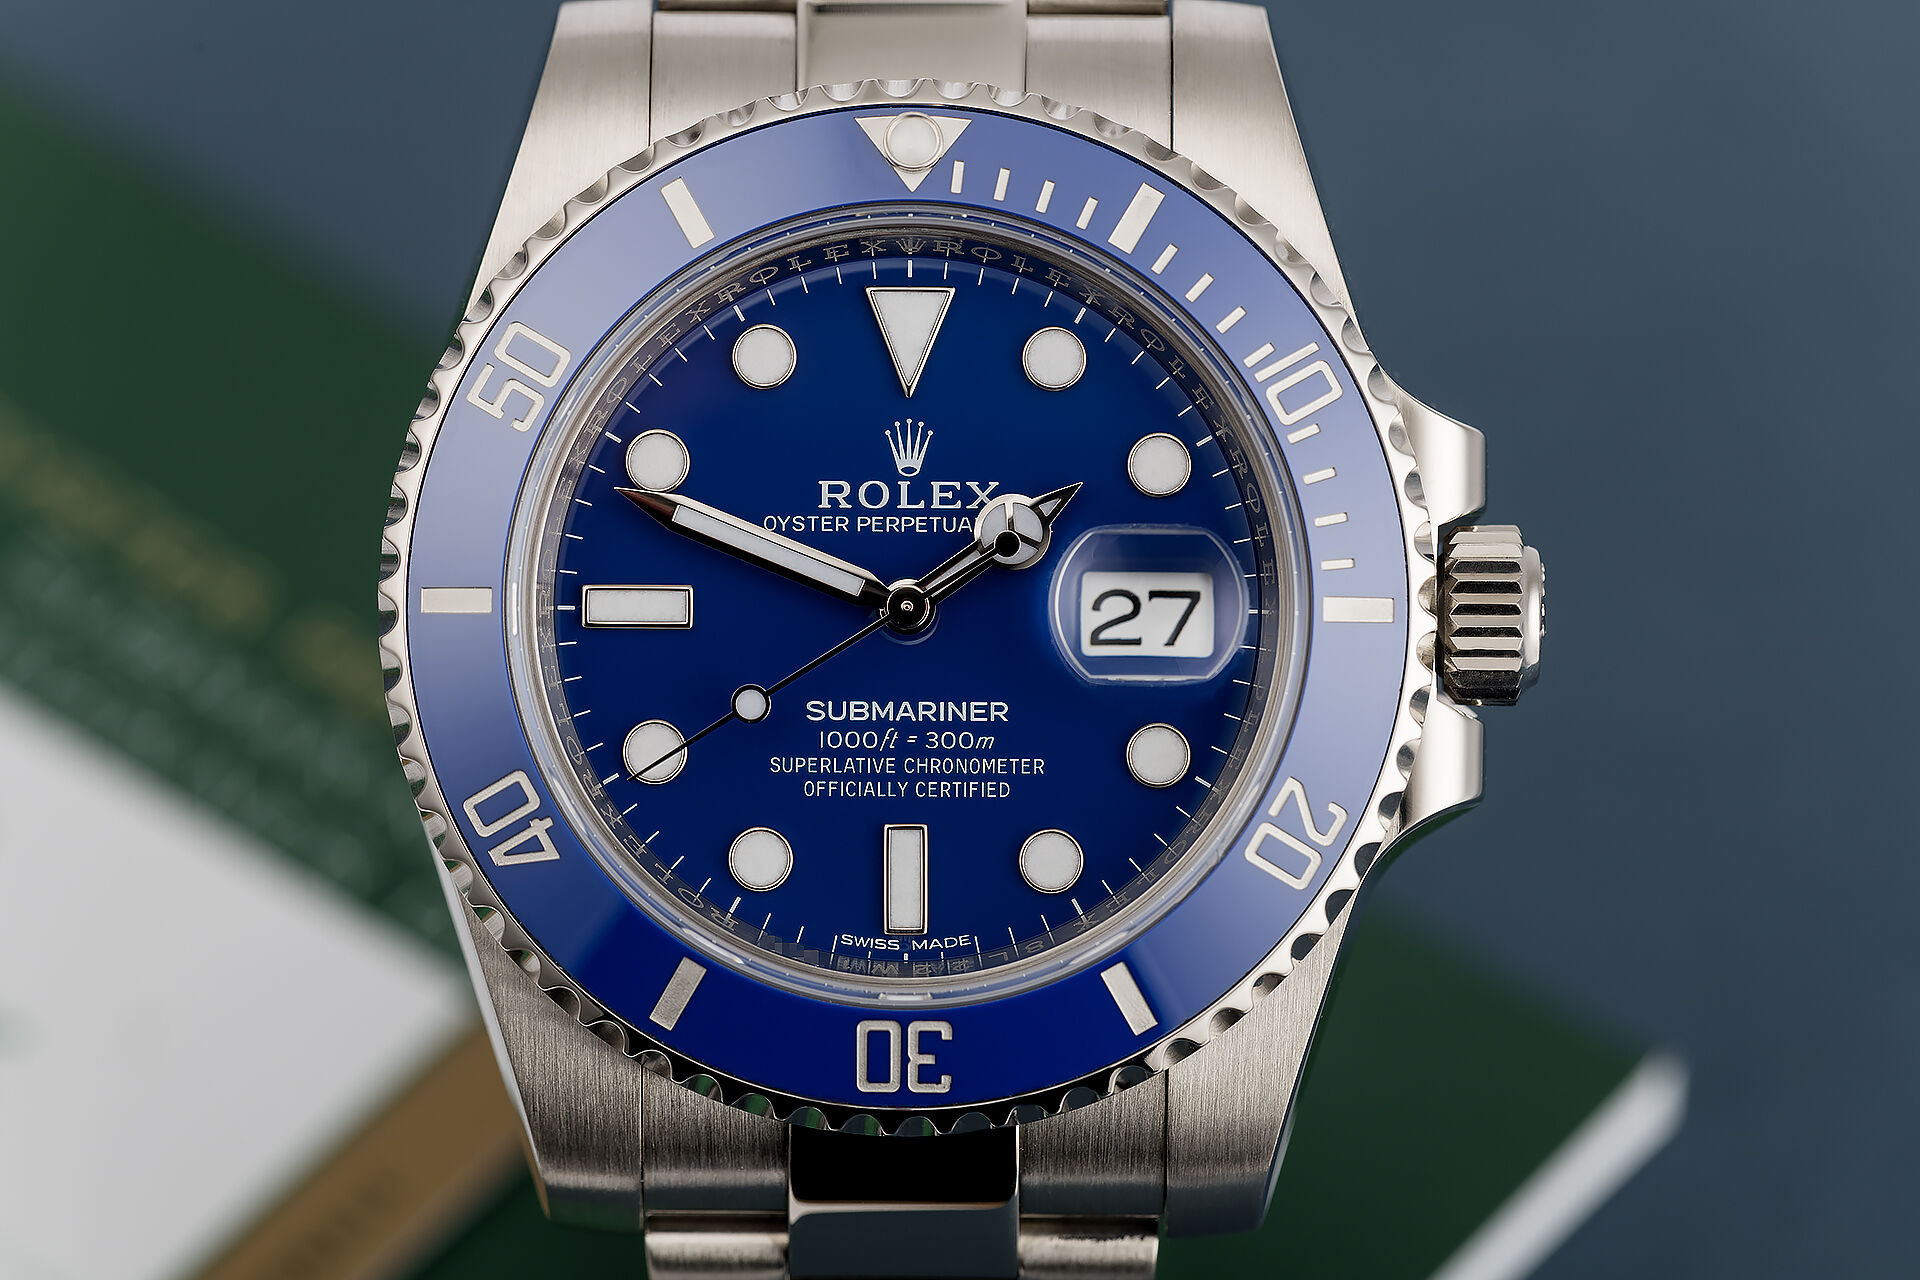 ref 116619LB | White Gold Blue Dial  | Rolex Submariner Date